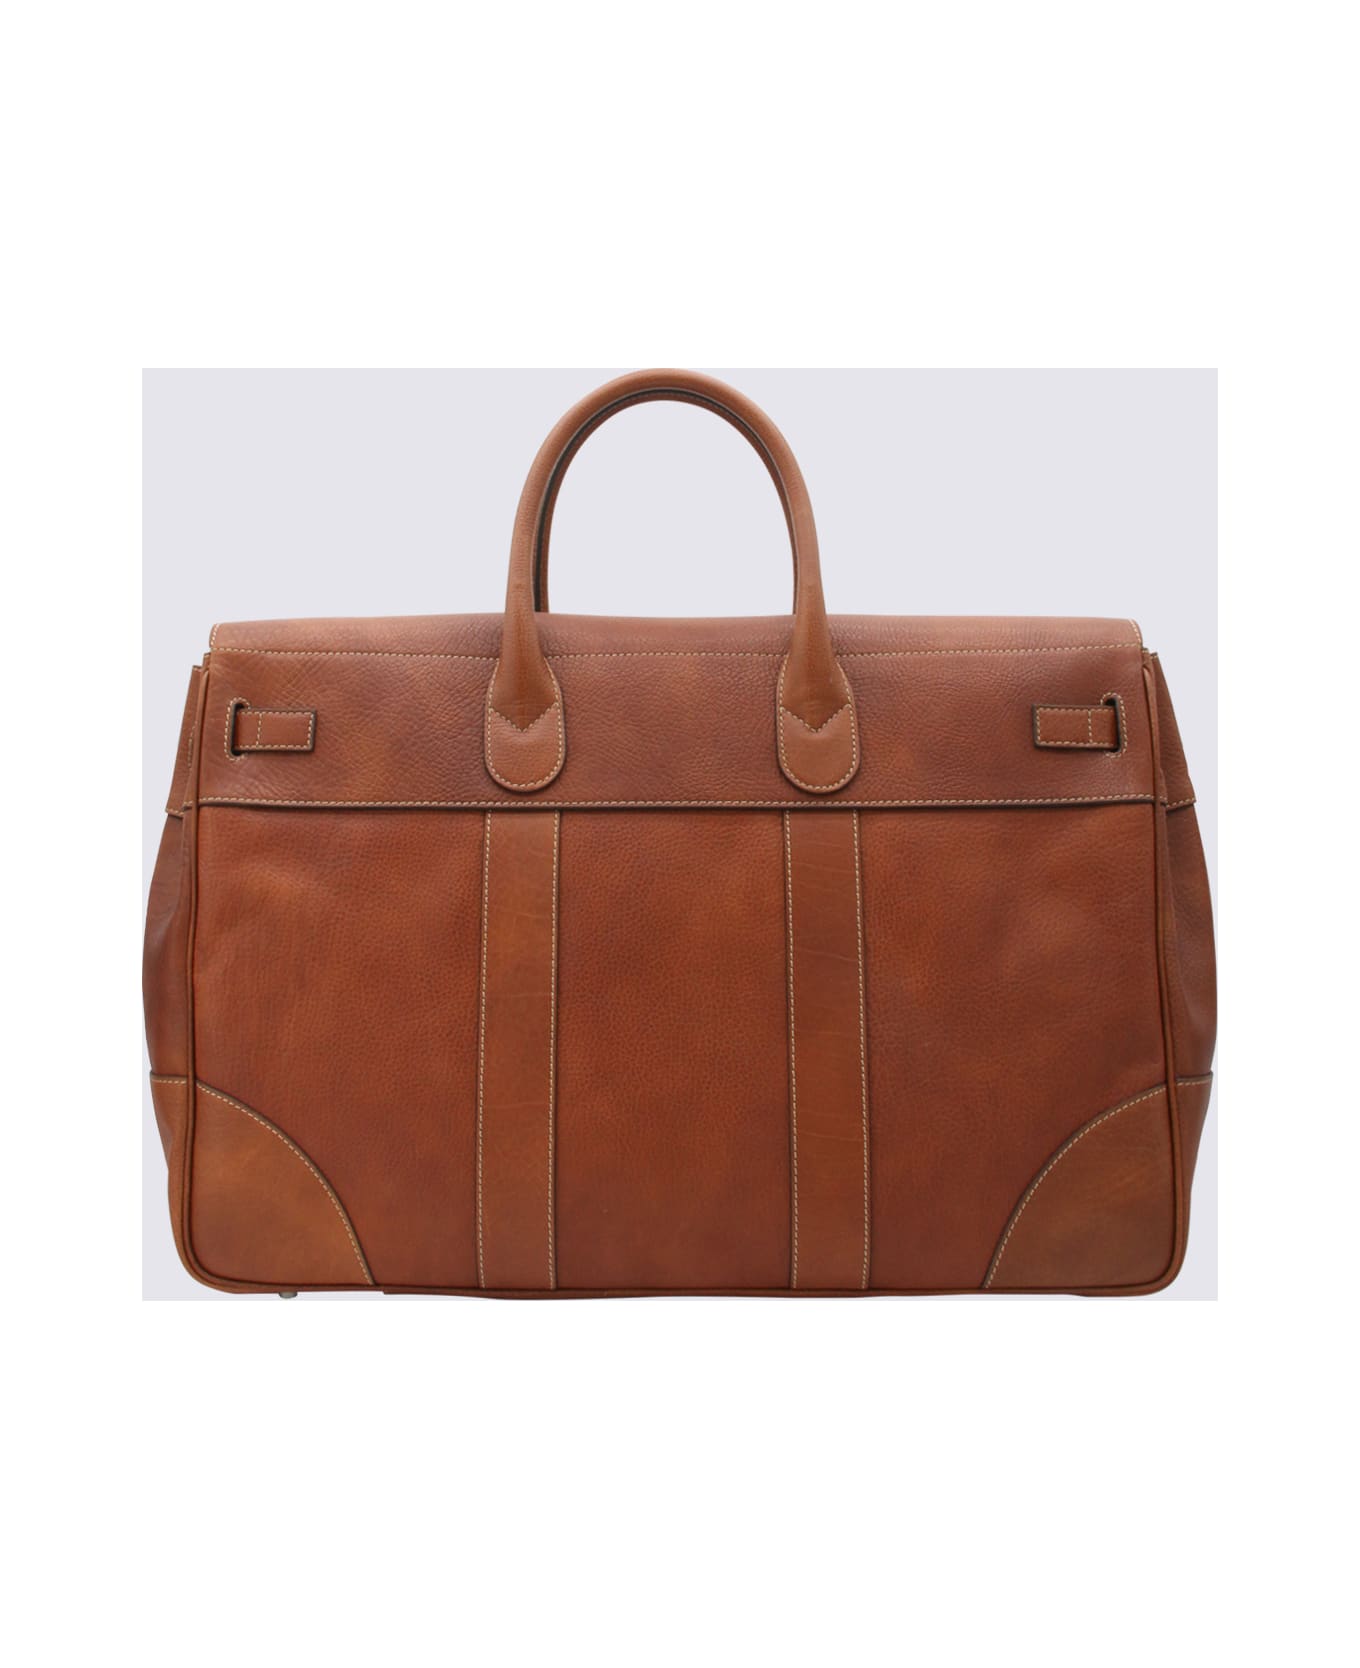 Brunello Cucinelli Brown Leather Weekender Travel Bag